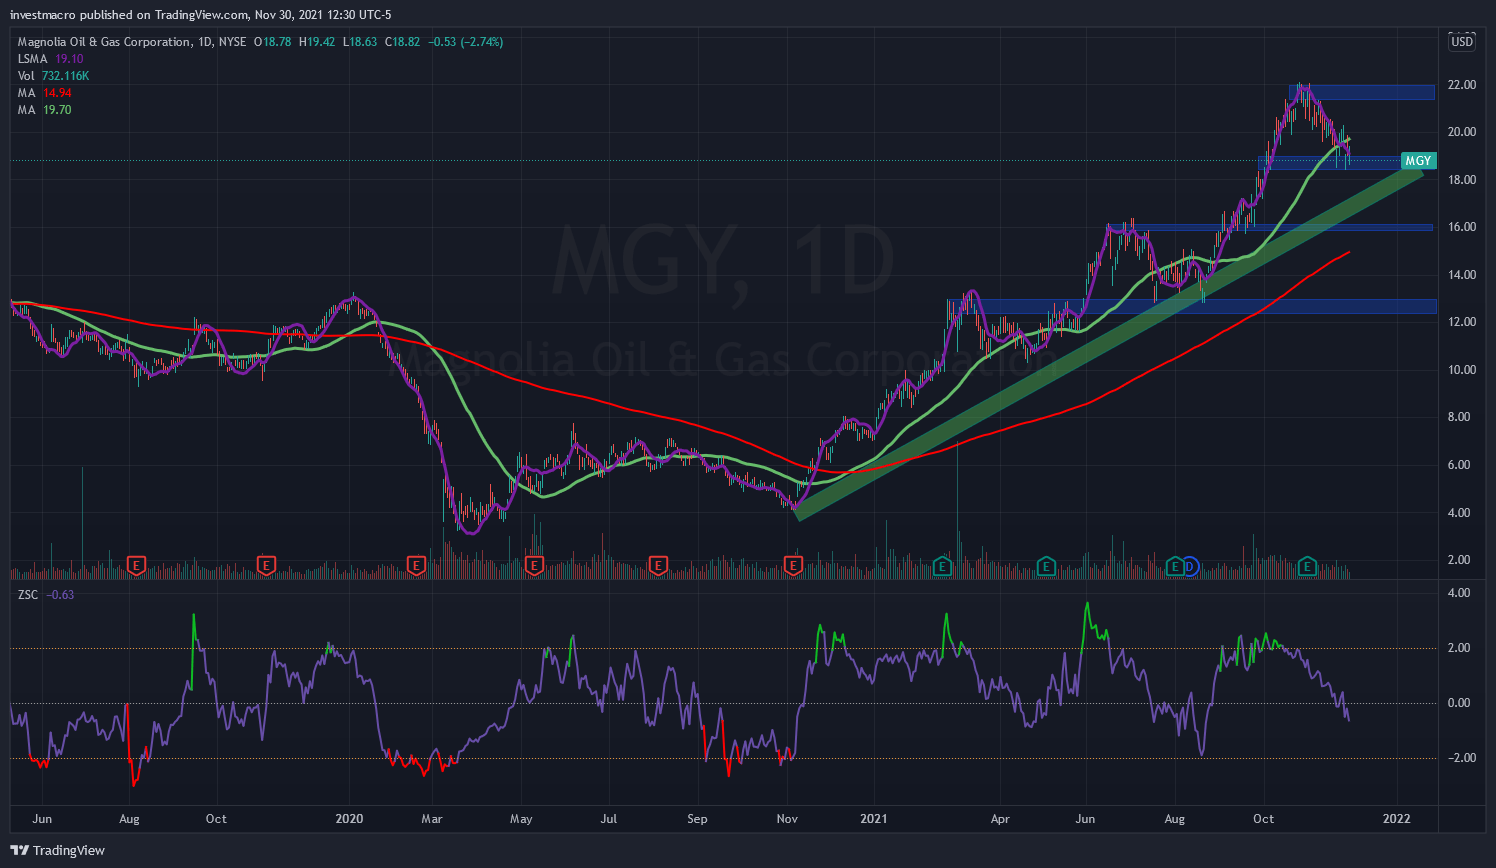 Magnolia Oil & Gas Corp. (NYSE: MGY) Energy Stock Chart